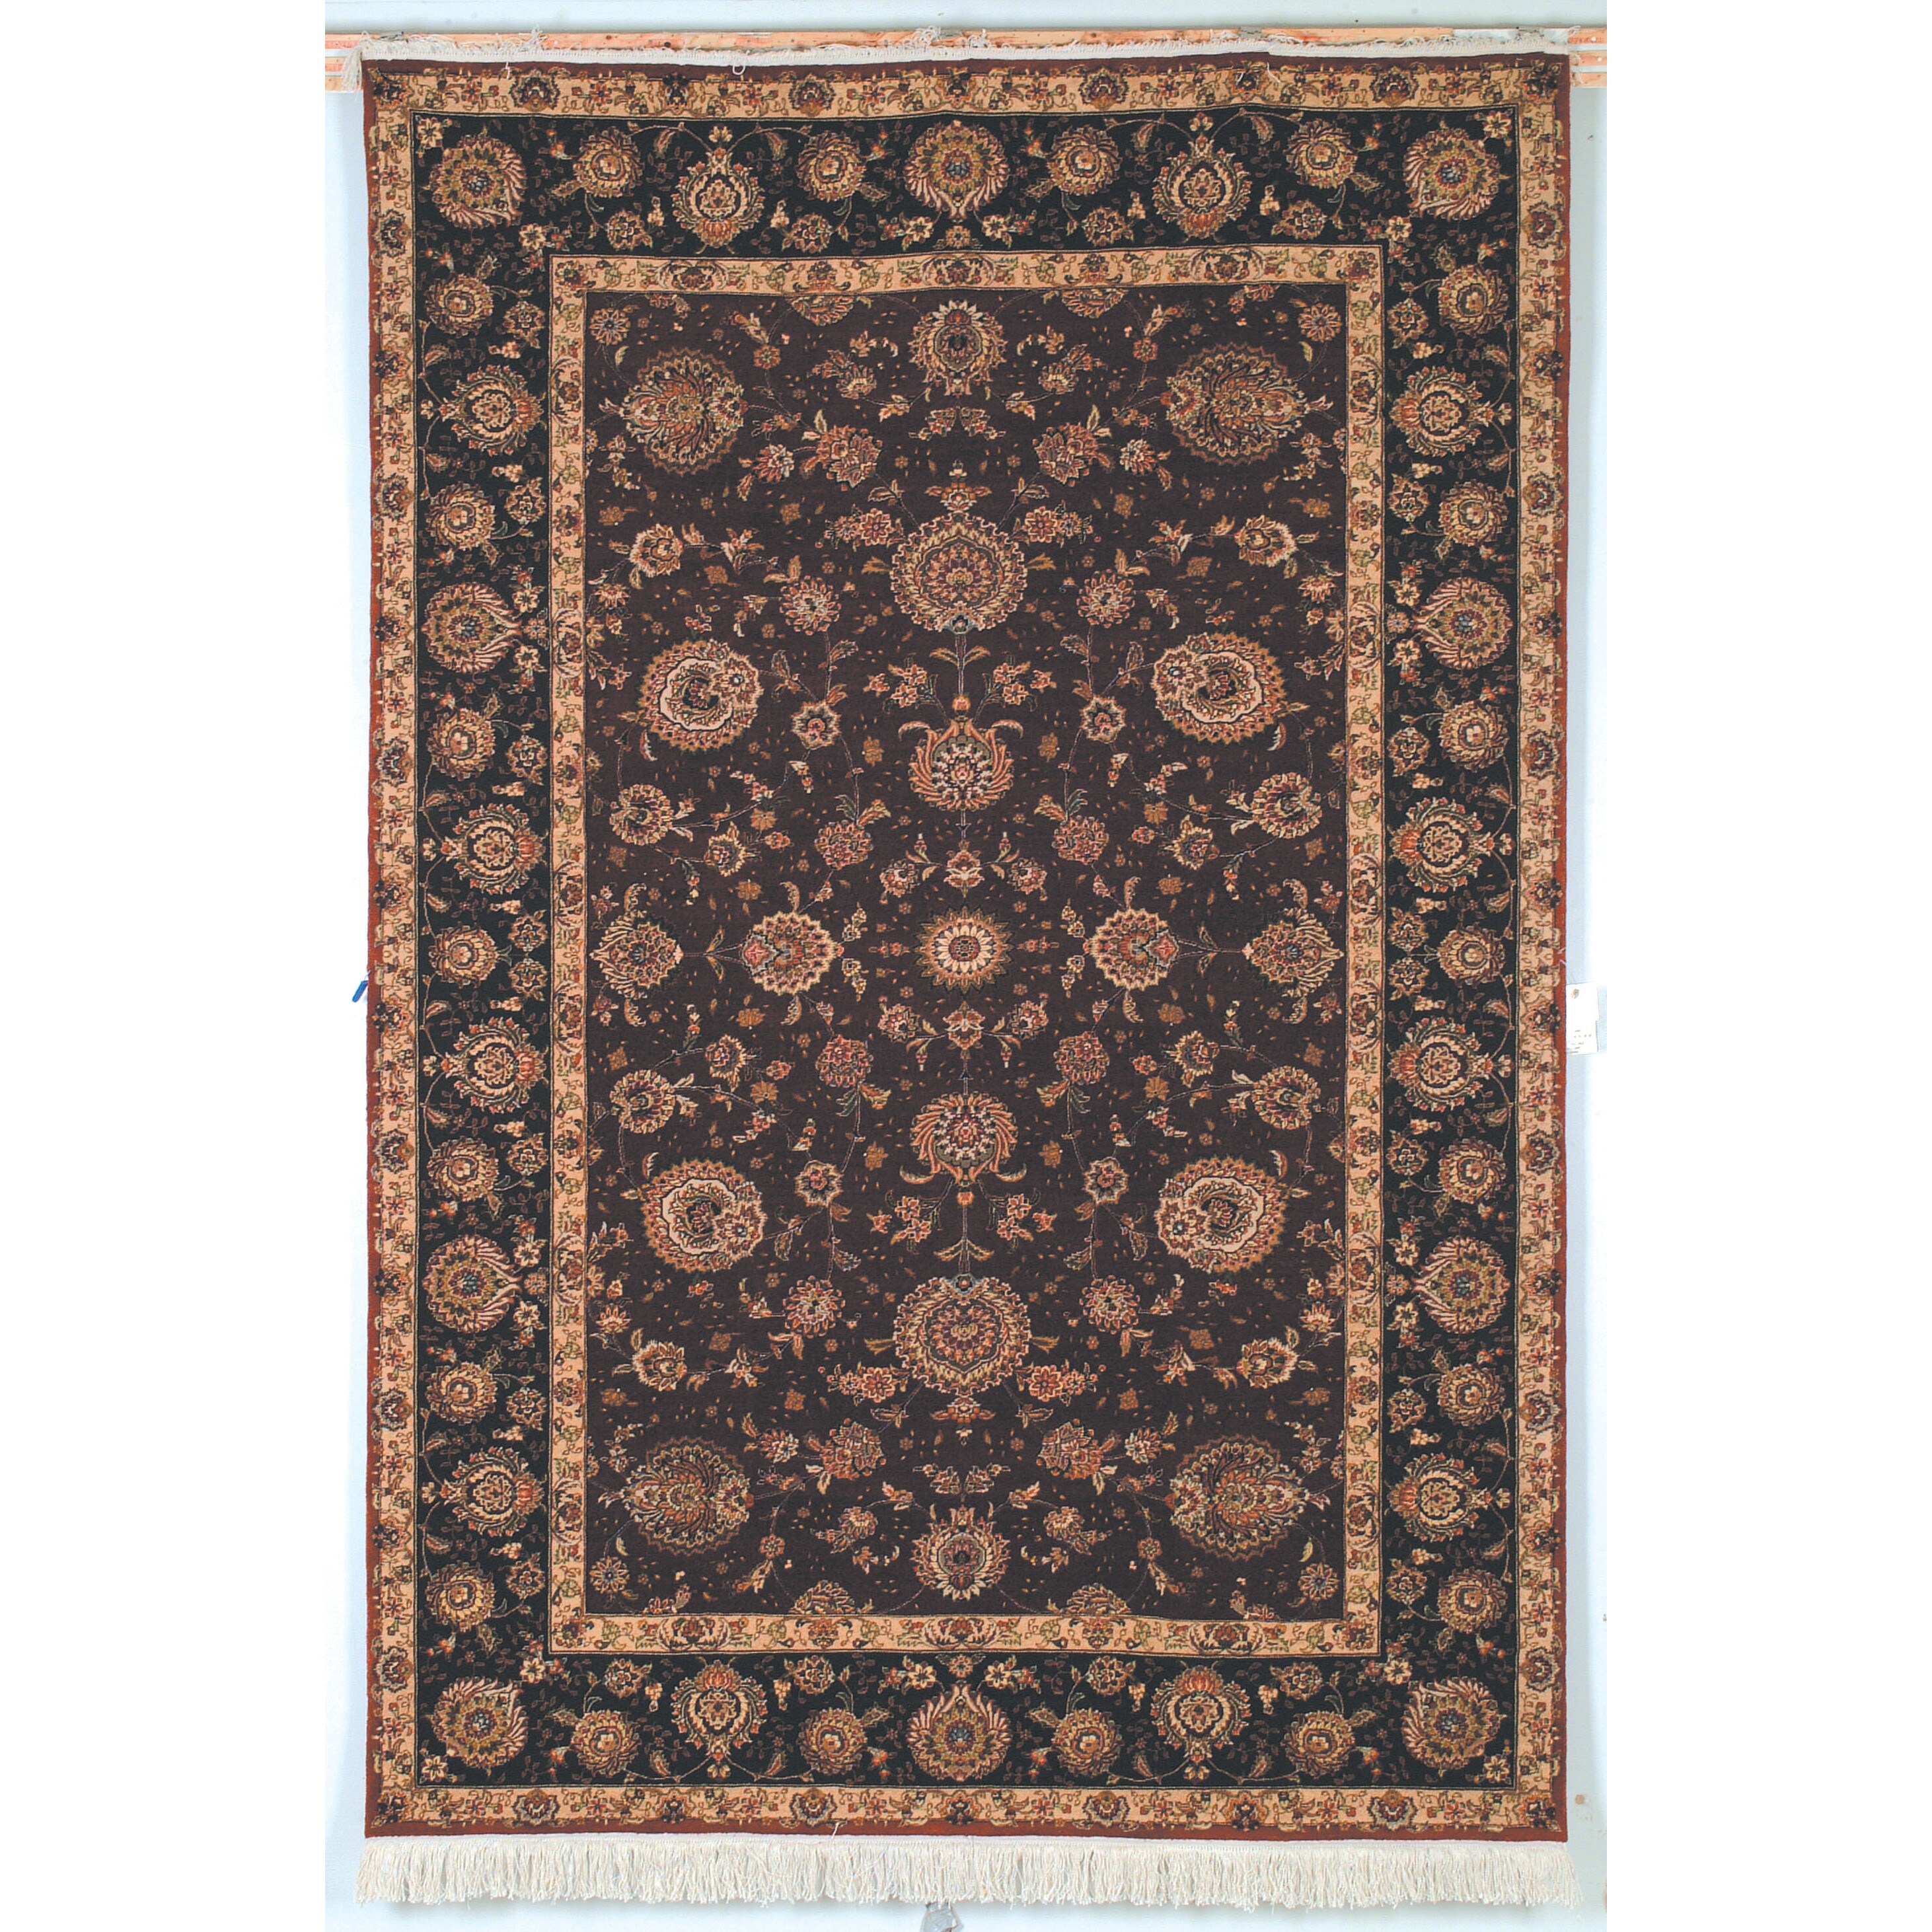 Safavieh Hand knotted Tabriz Floral Burgundy/ Brown Wool/ Silk Rug (8 X 10)